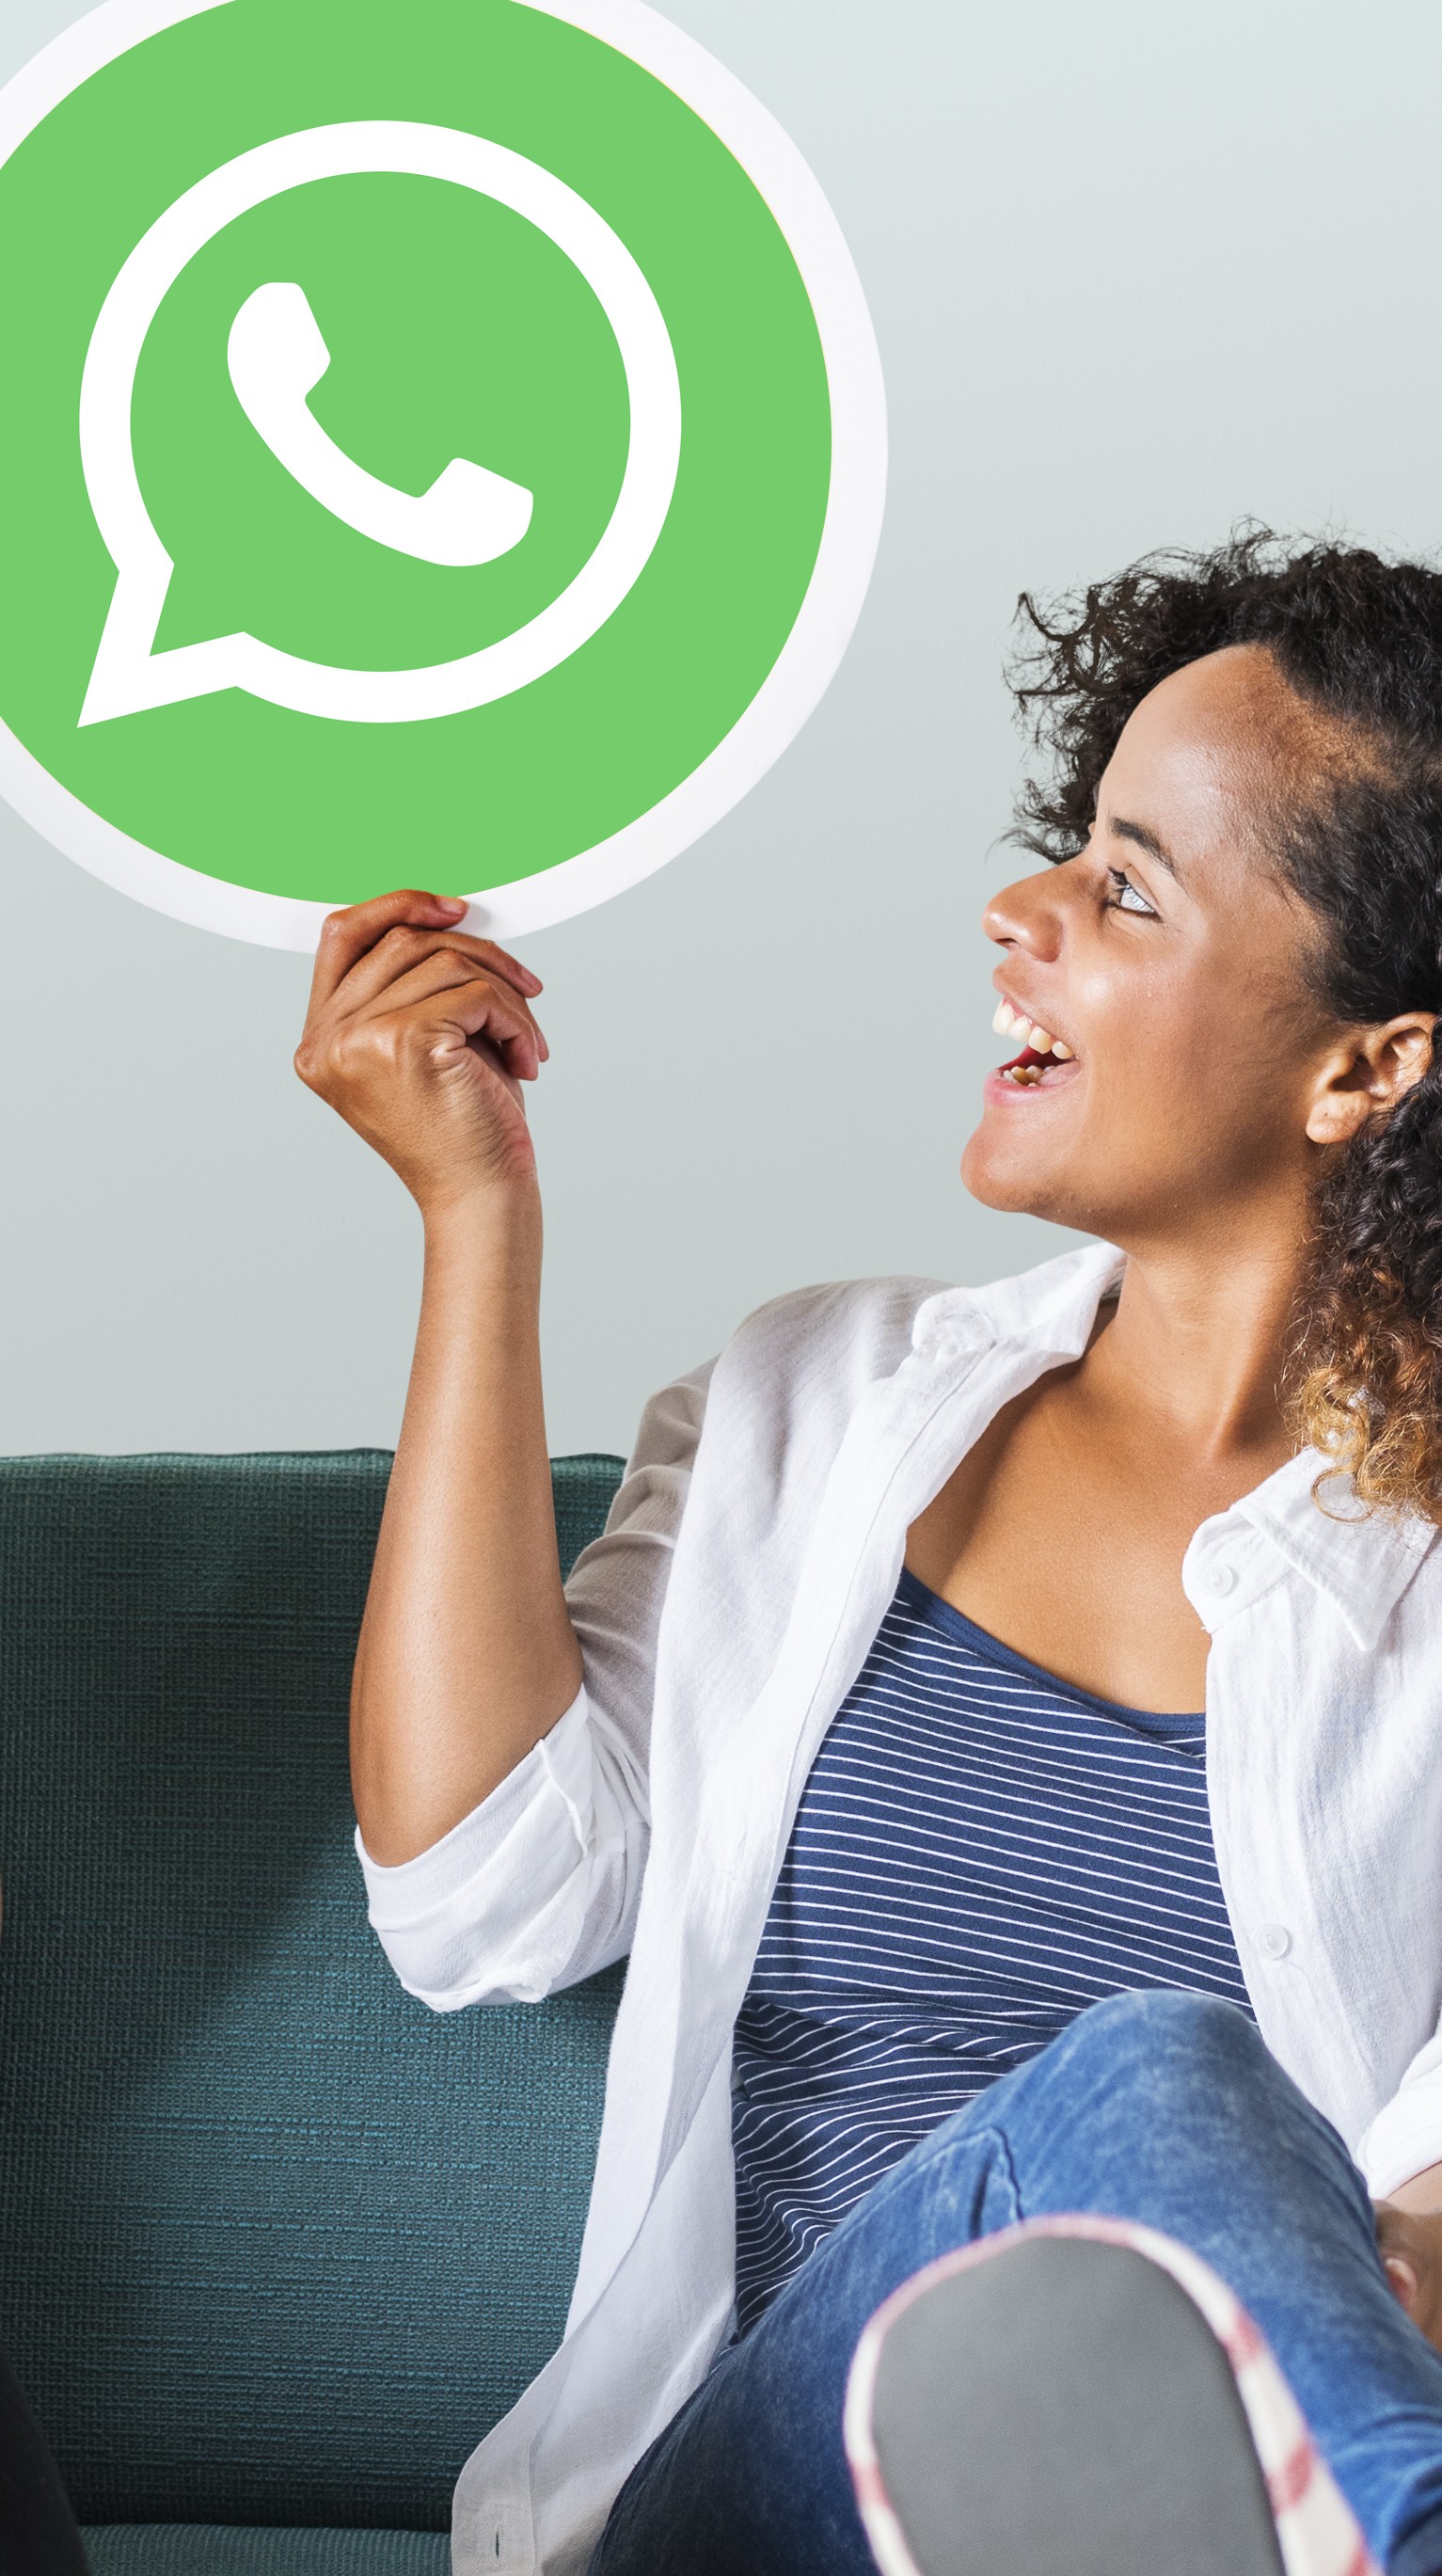 Logotipo Whatsapp Png Imagens – Download Grátis no Freepik